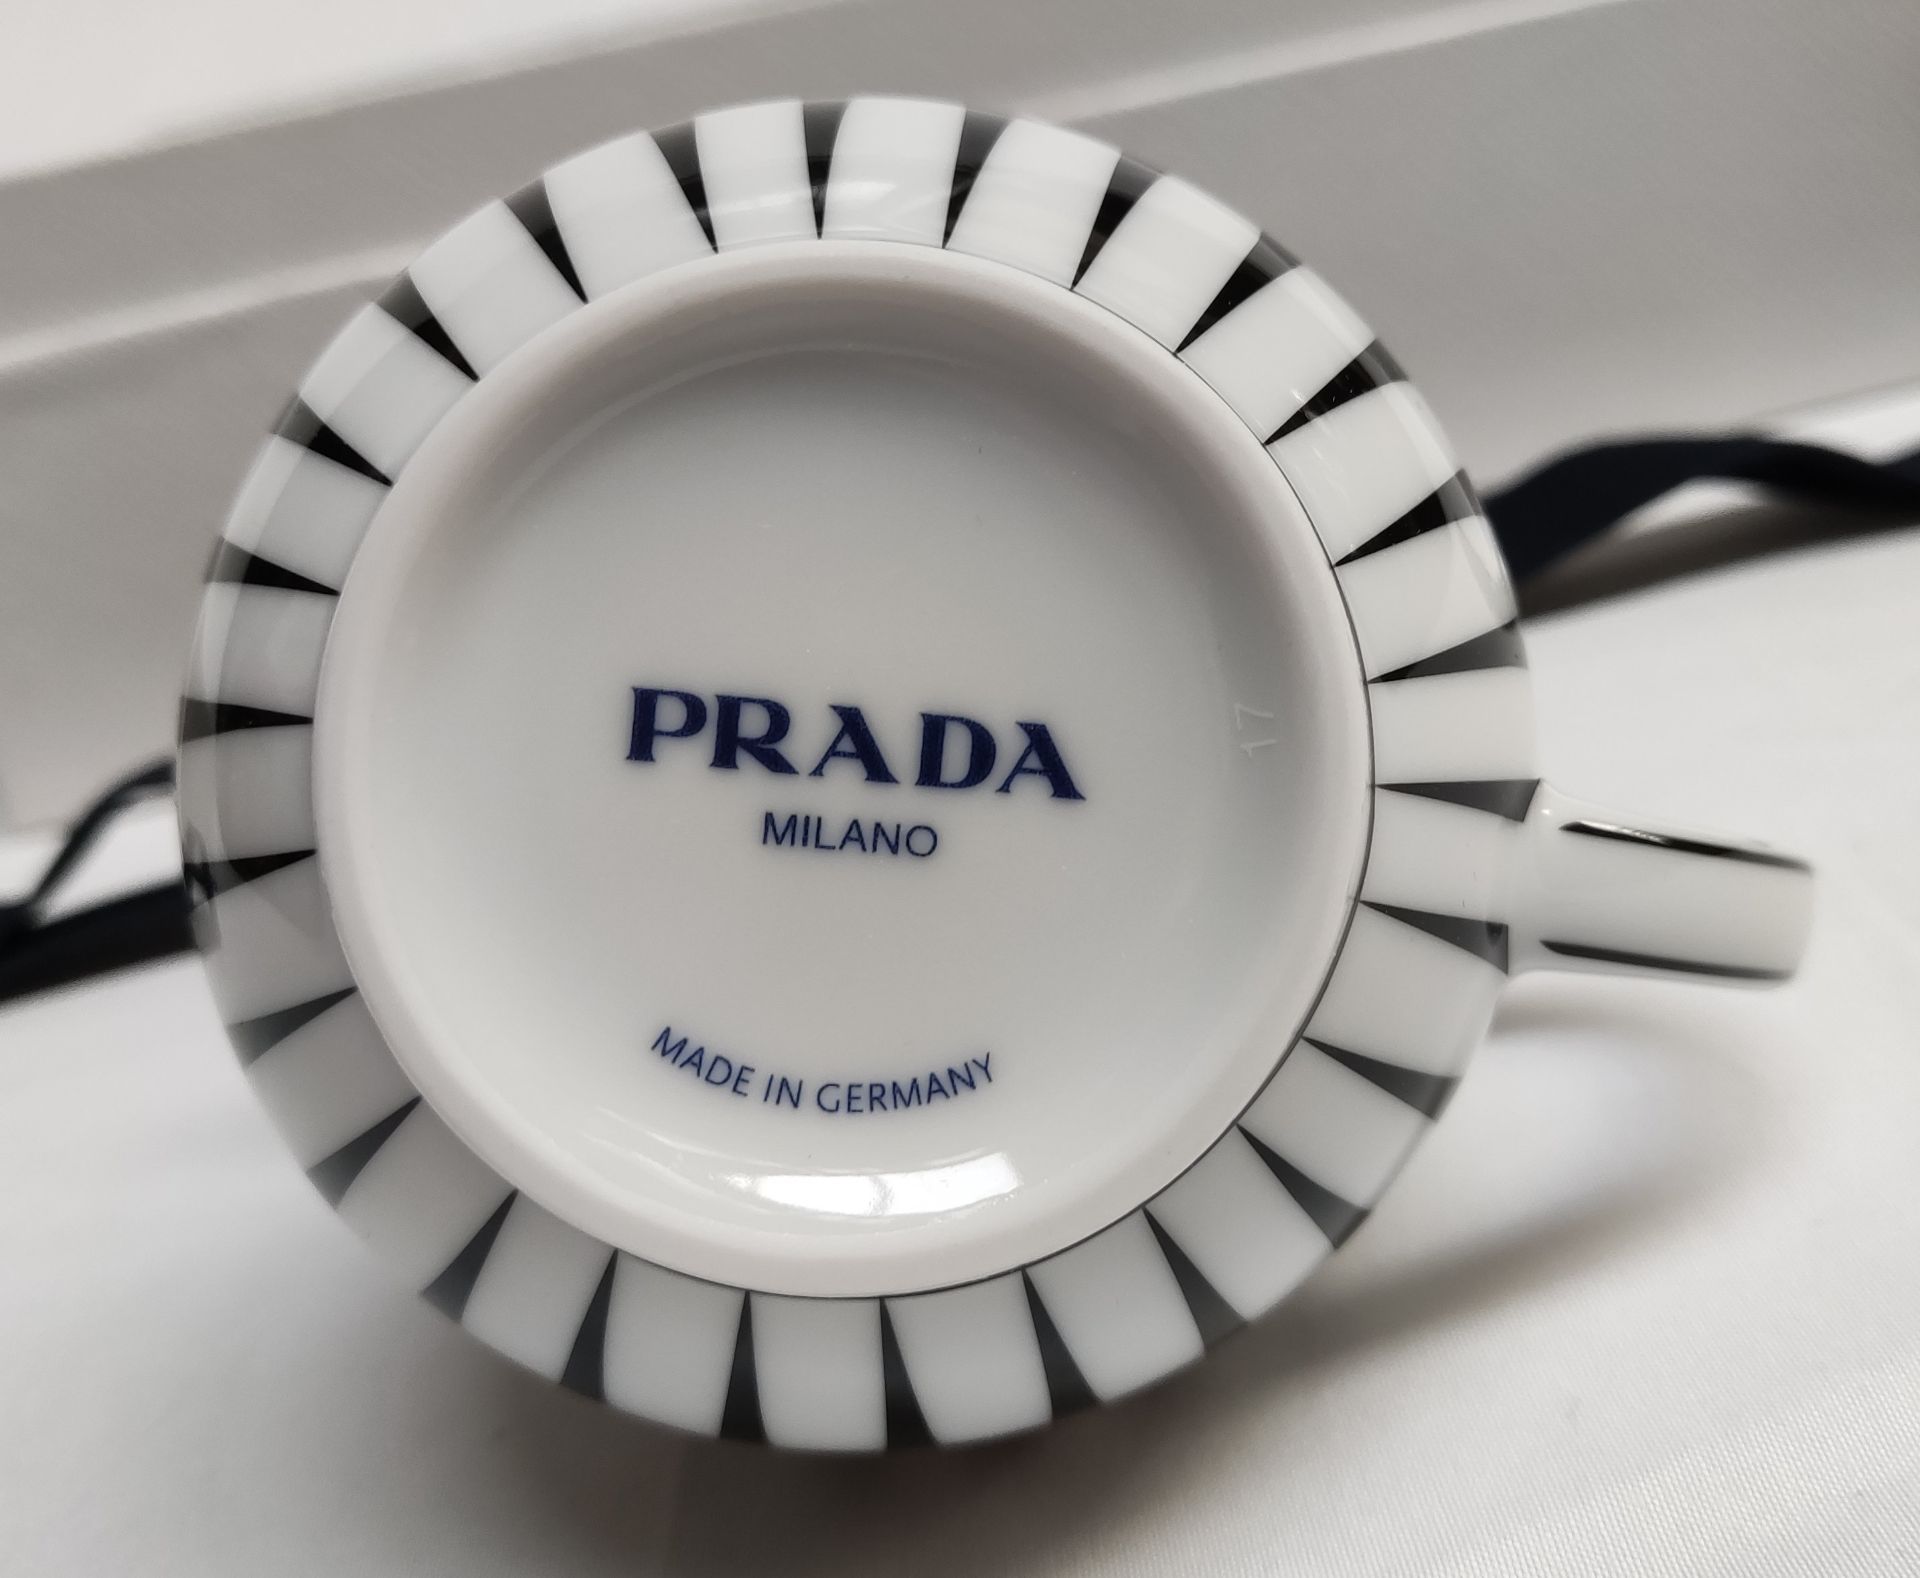 1 x PRADA Porcelain Creamer Jug In Black And White - RRP £360.00 - Image 6 of 20